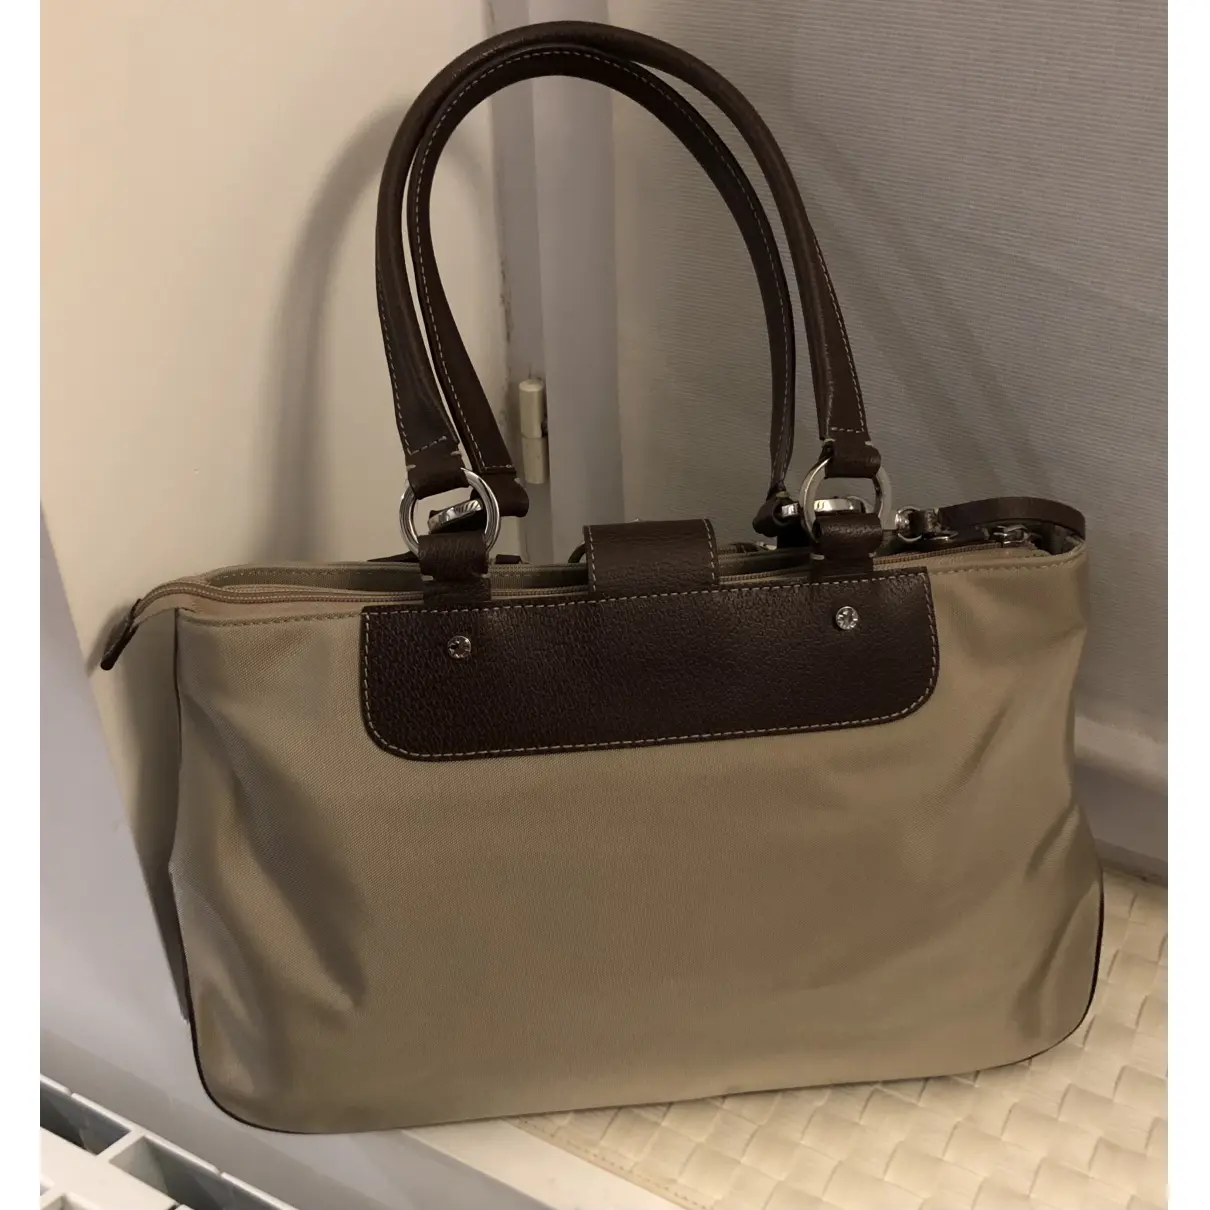 Buy Lancel Cloth handbag online